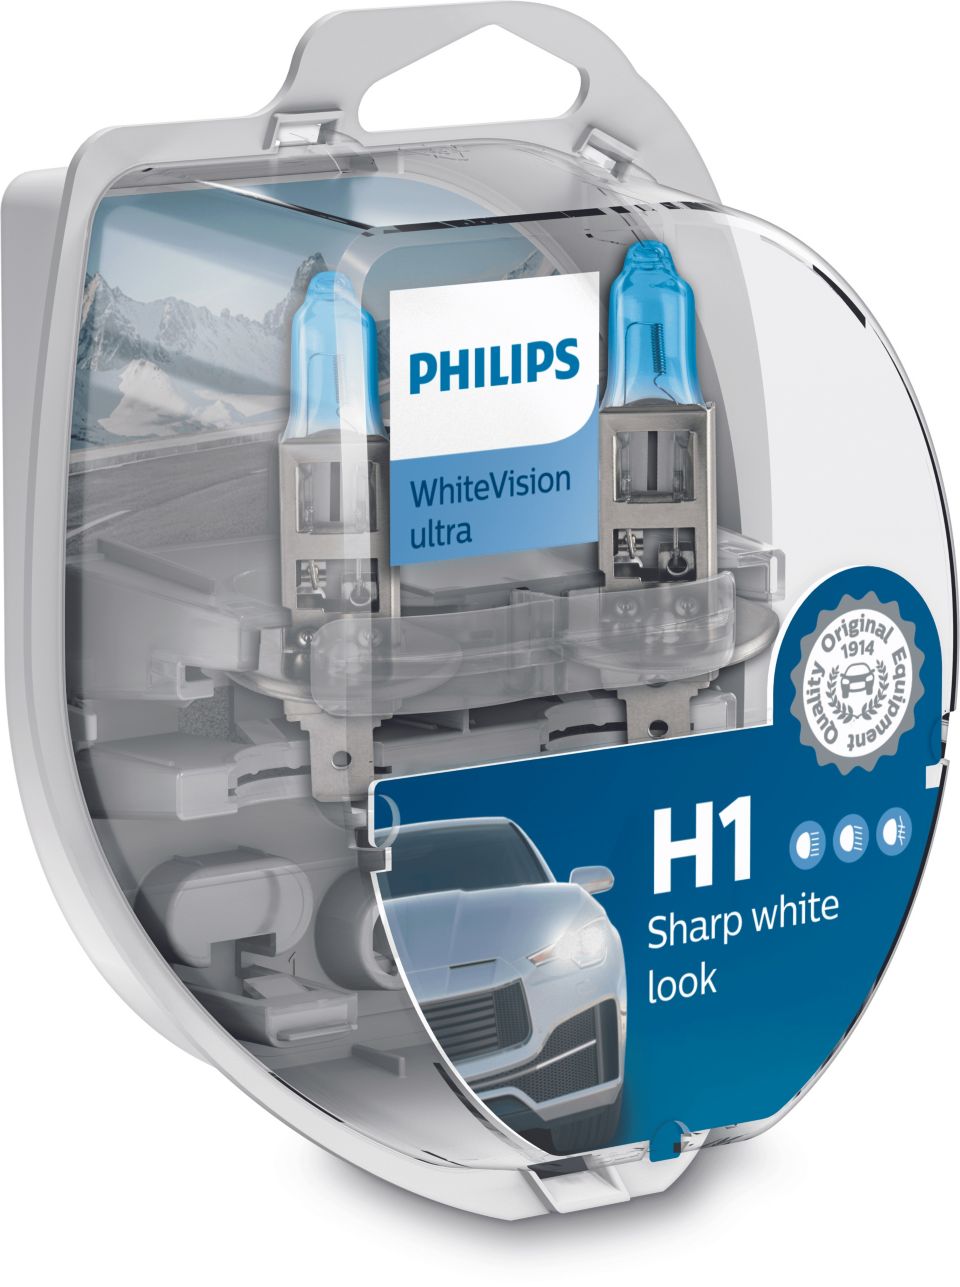 Philips WhiteVision Ultra Car Headlight Bulbs H7 (Twin Pack) White